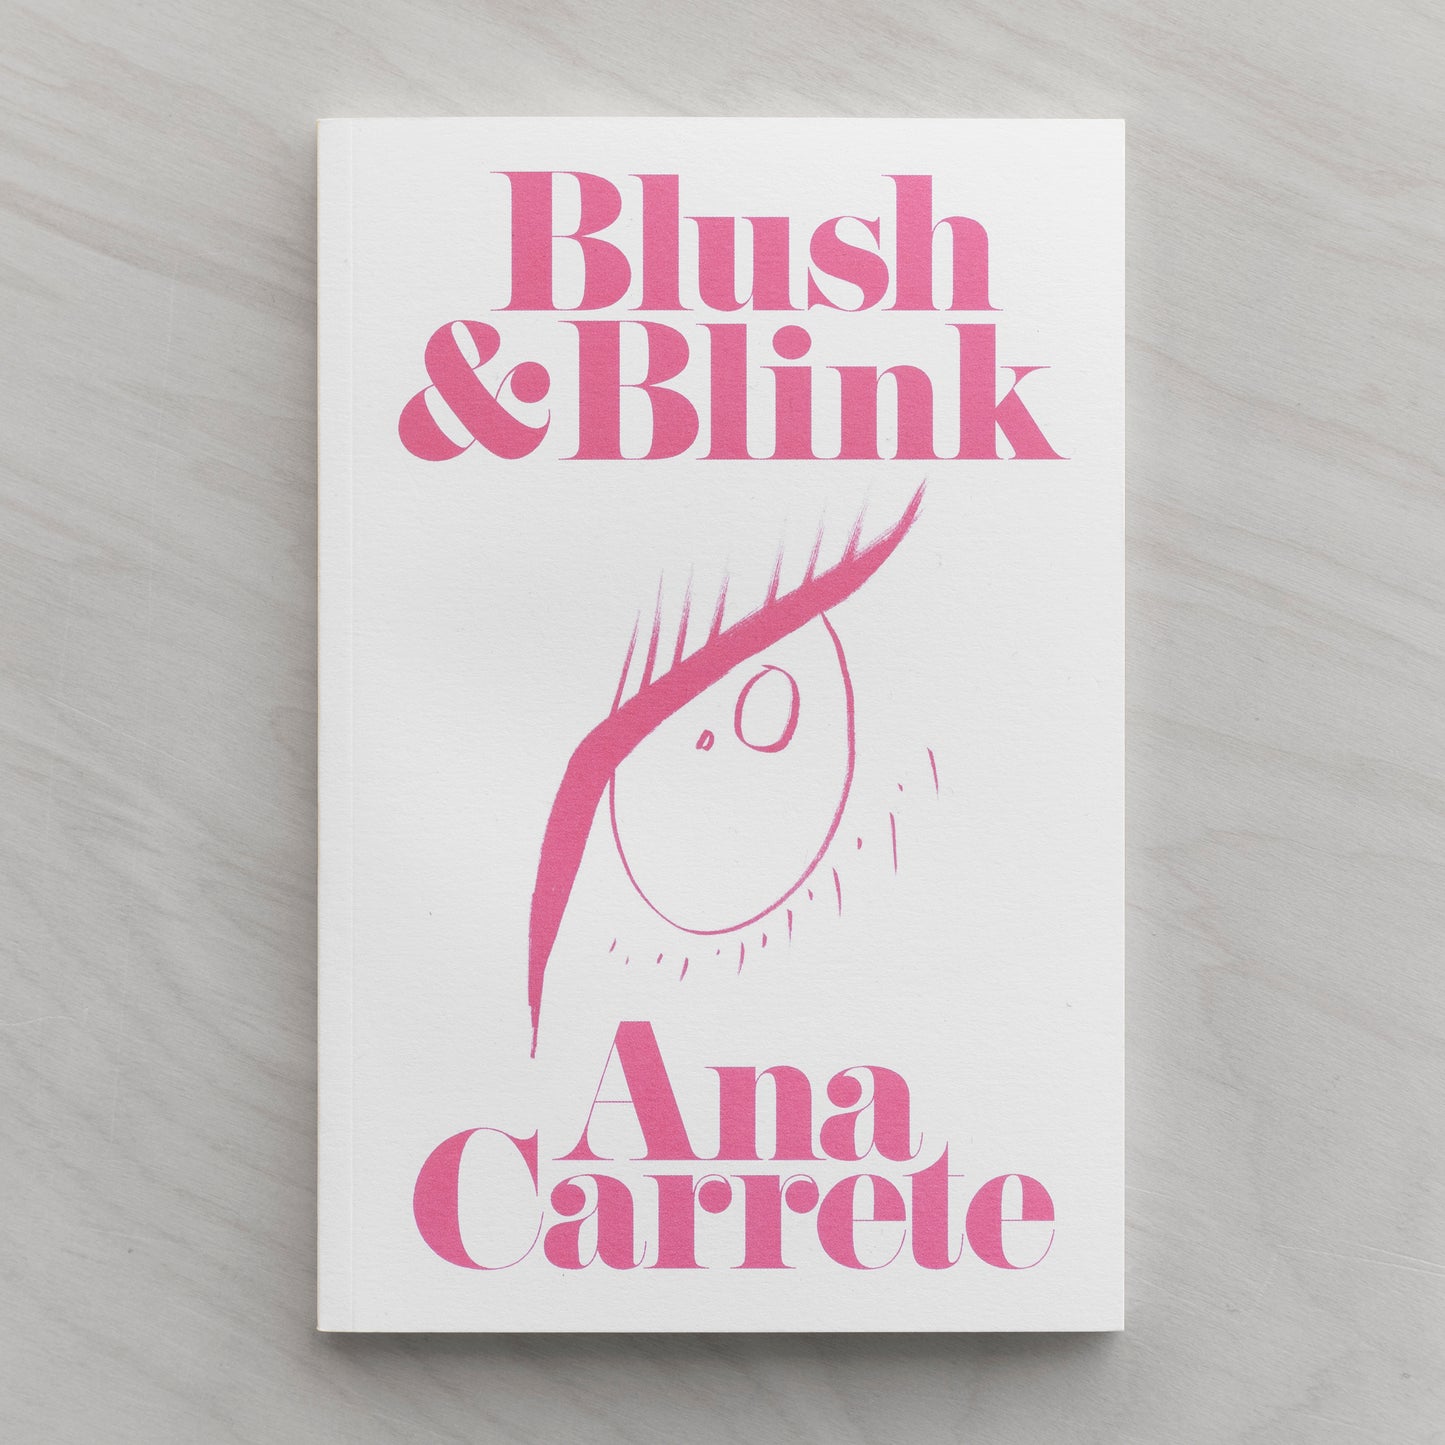 Blush & Blink by Ana Carrete